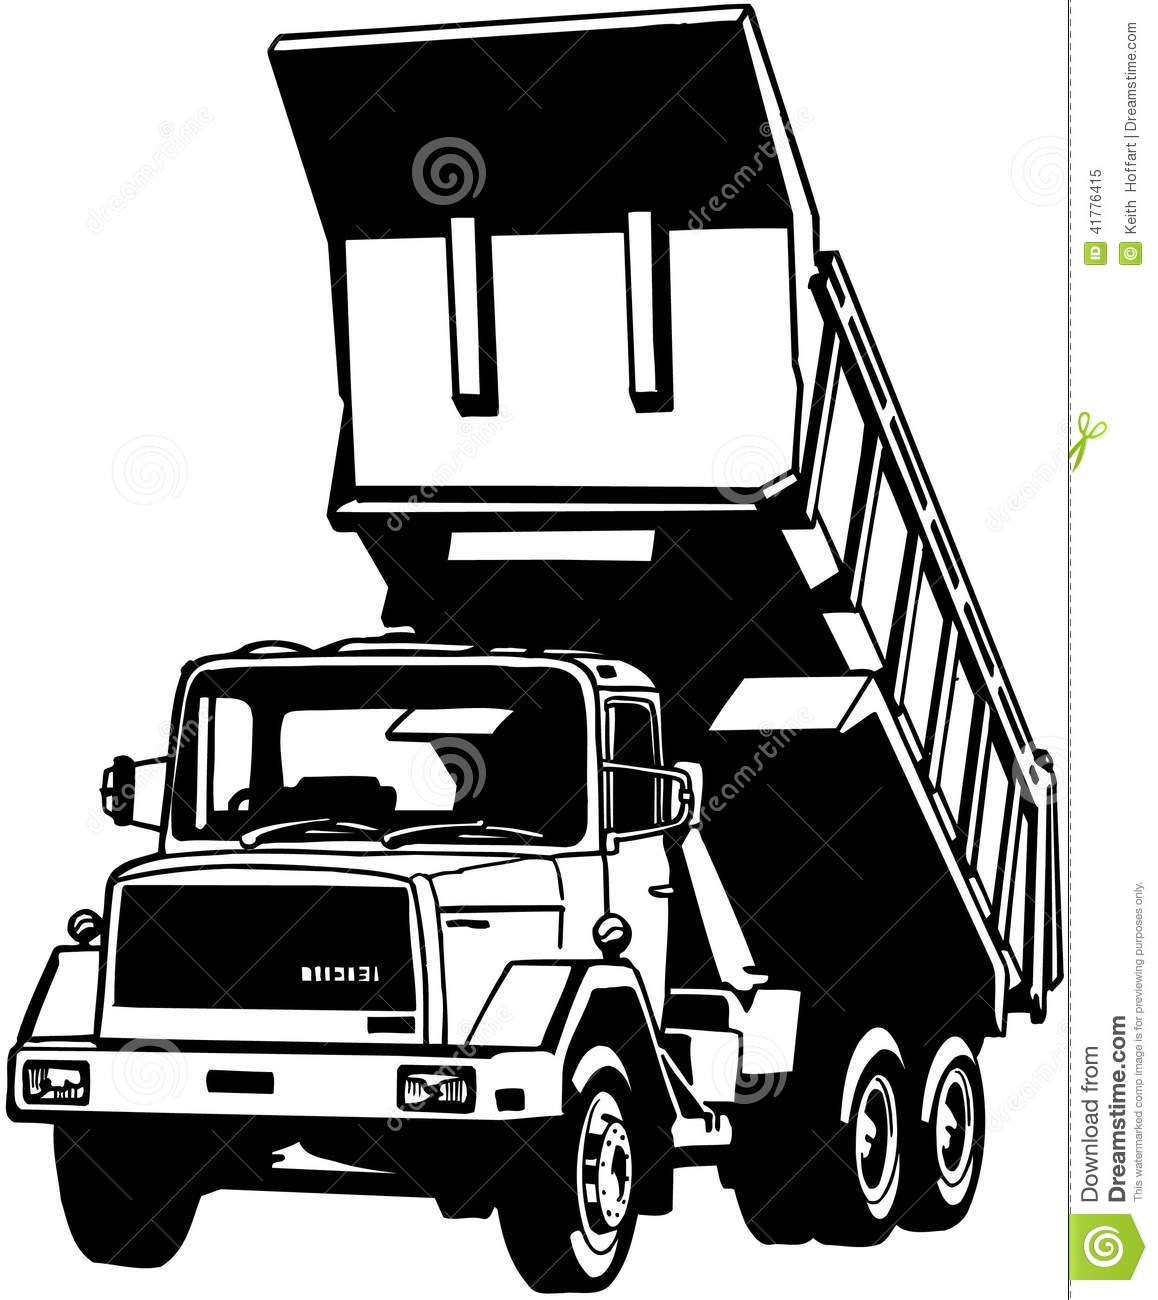 Dump Truck Cartoon Vector Clipart Created In Adobe Illustrator In Eps